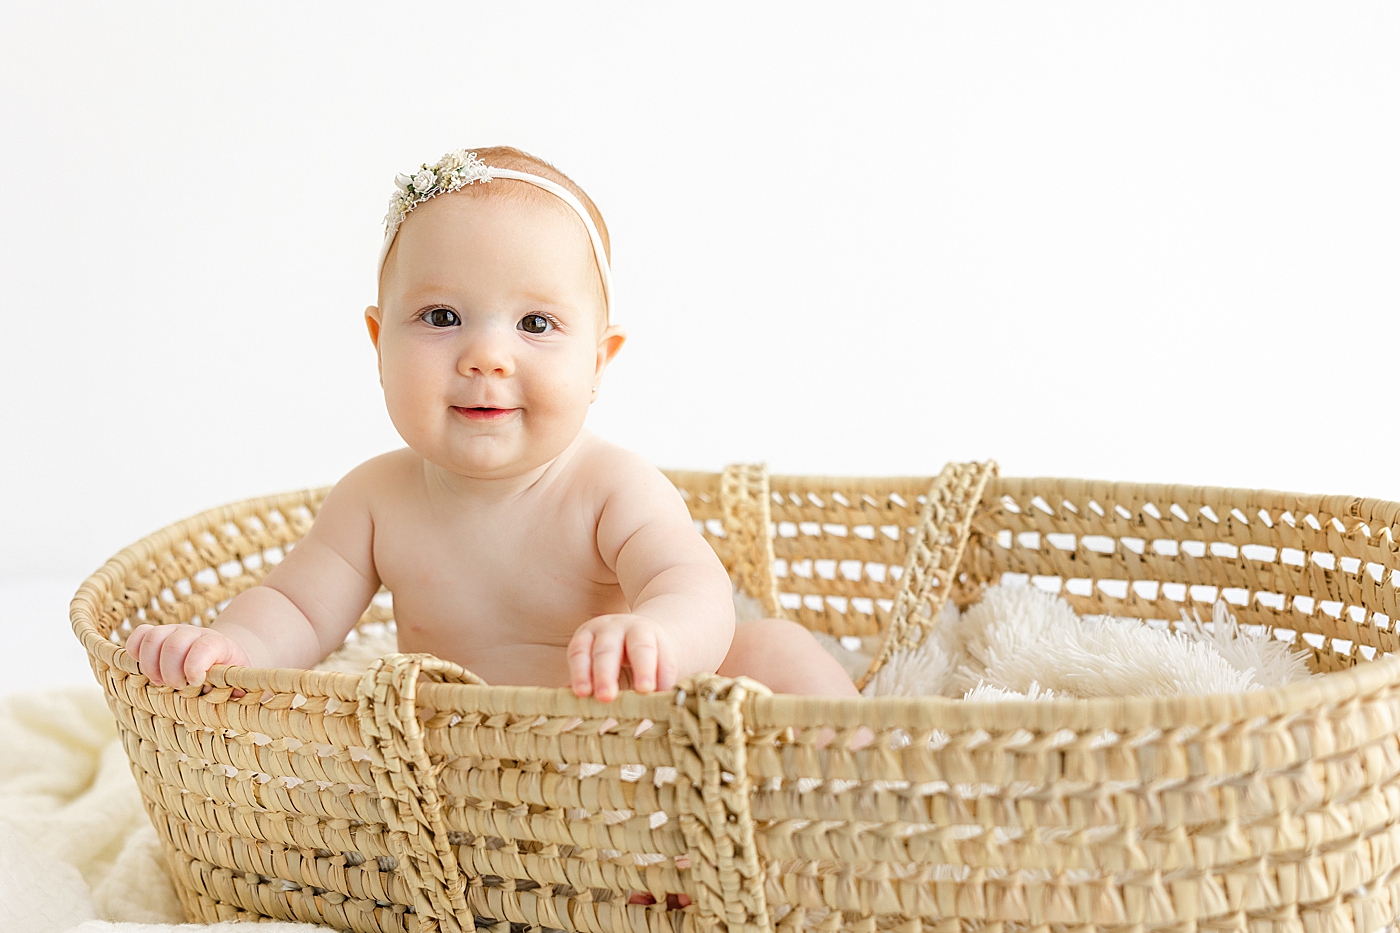 Baby girl in a headband sitting in a headband | Image by Sana Ahmed Photography